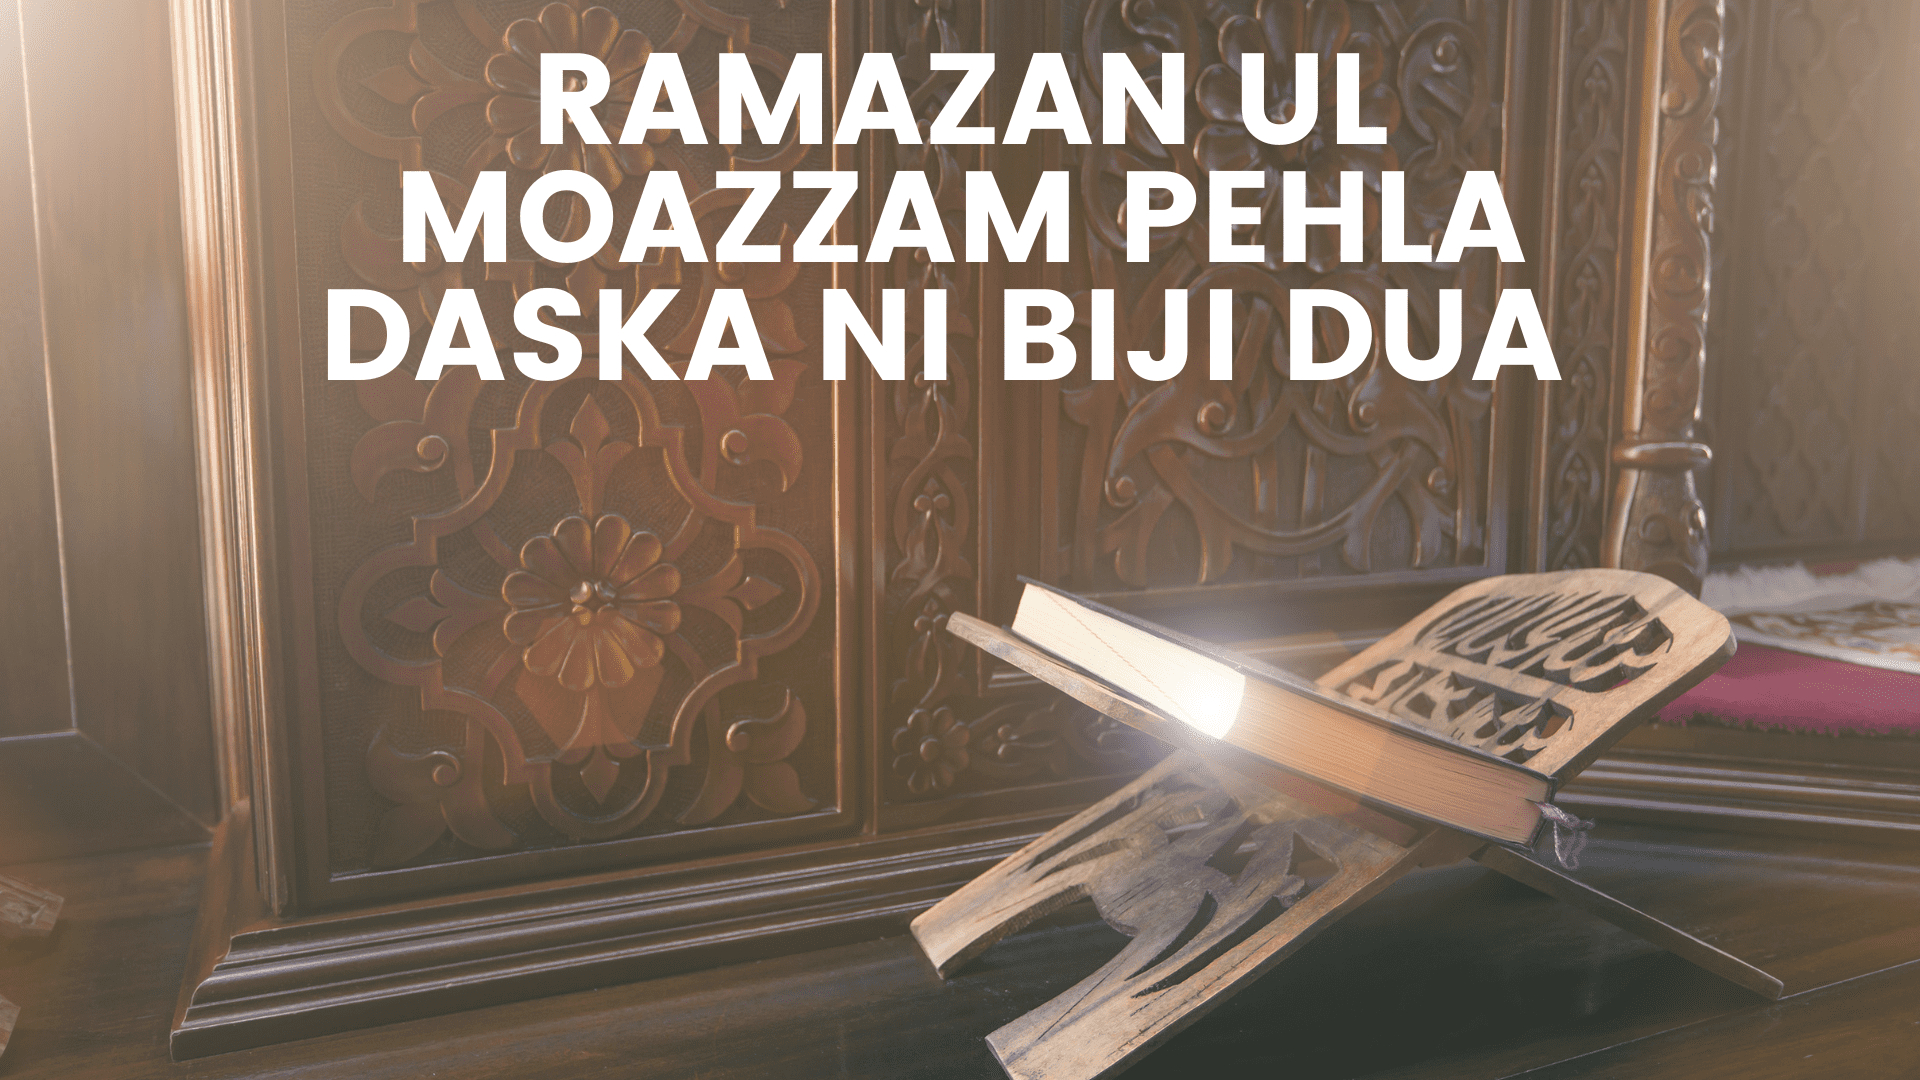 Ramazan ul Moazzam Pehla Daska Ni Biji Dua